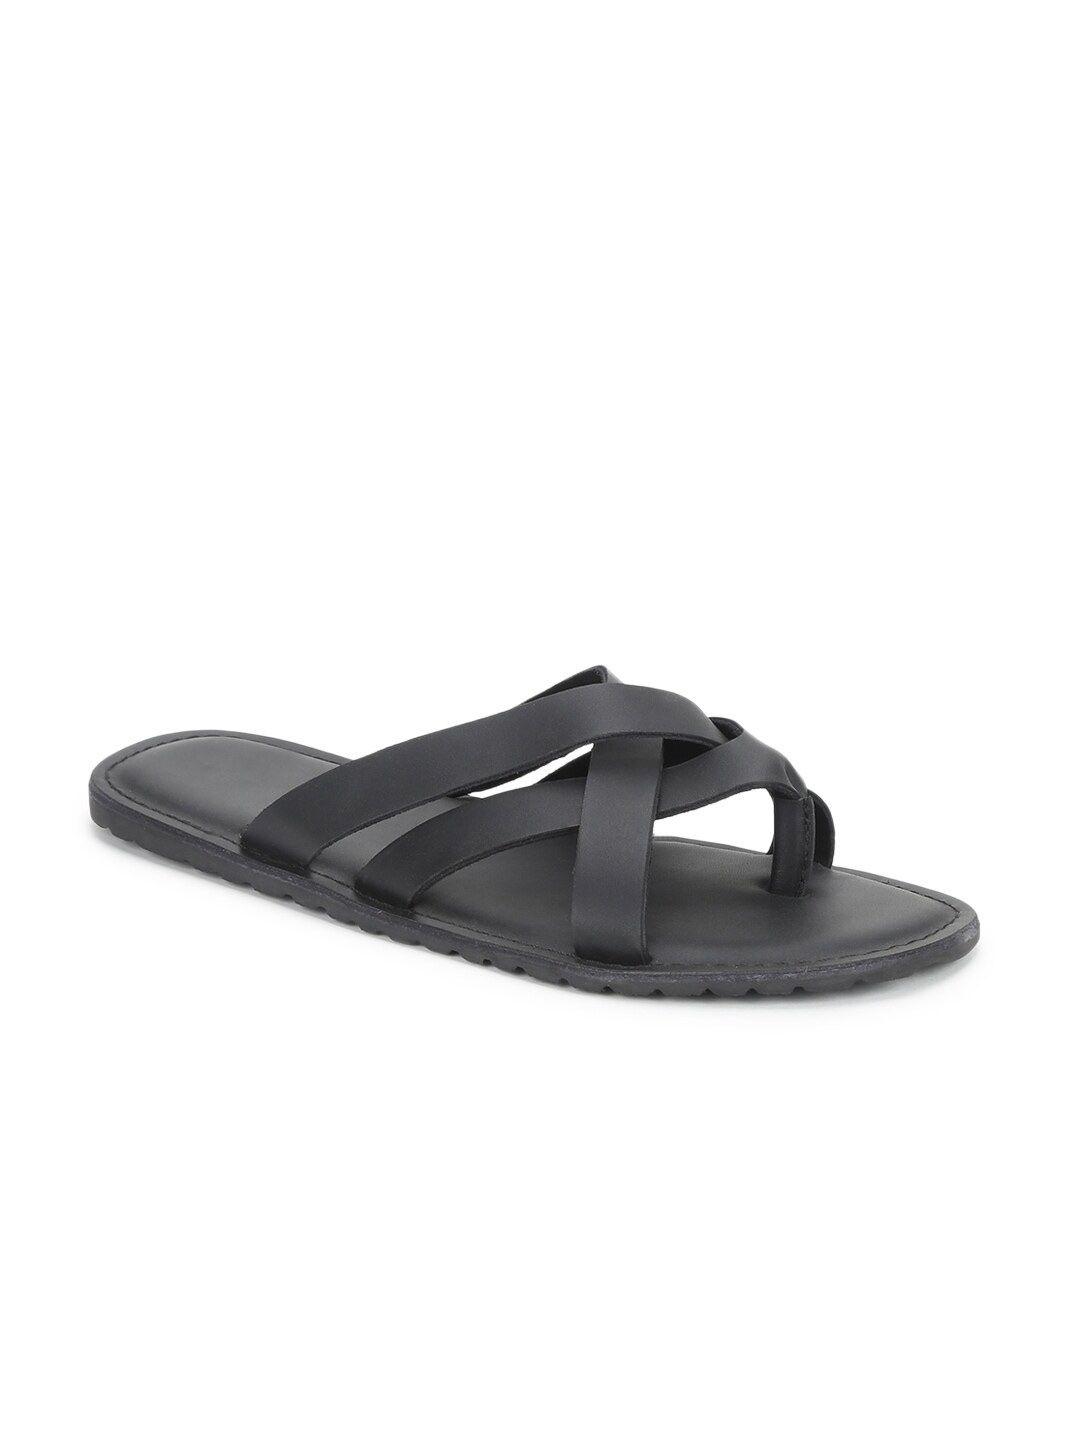 fabindia-men--criss-cross-strap-leather-comfort-sandals